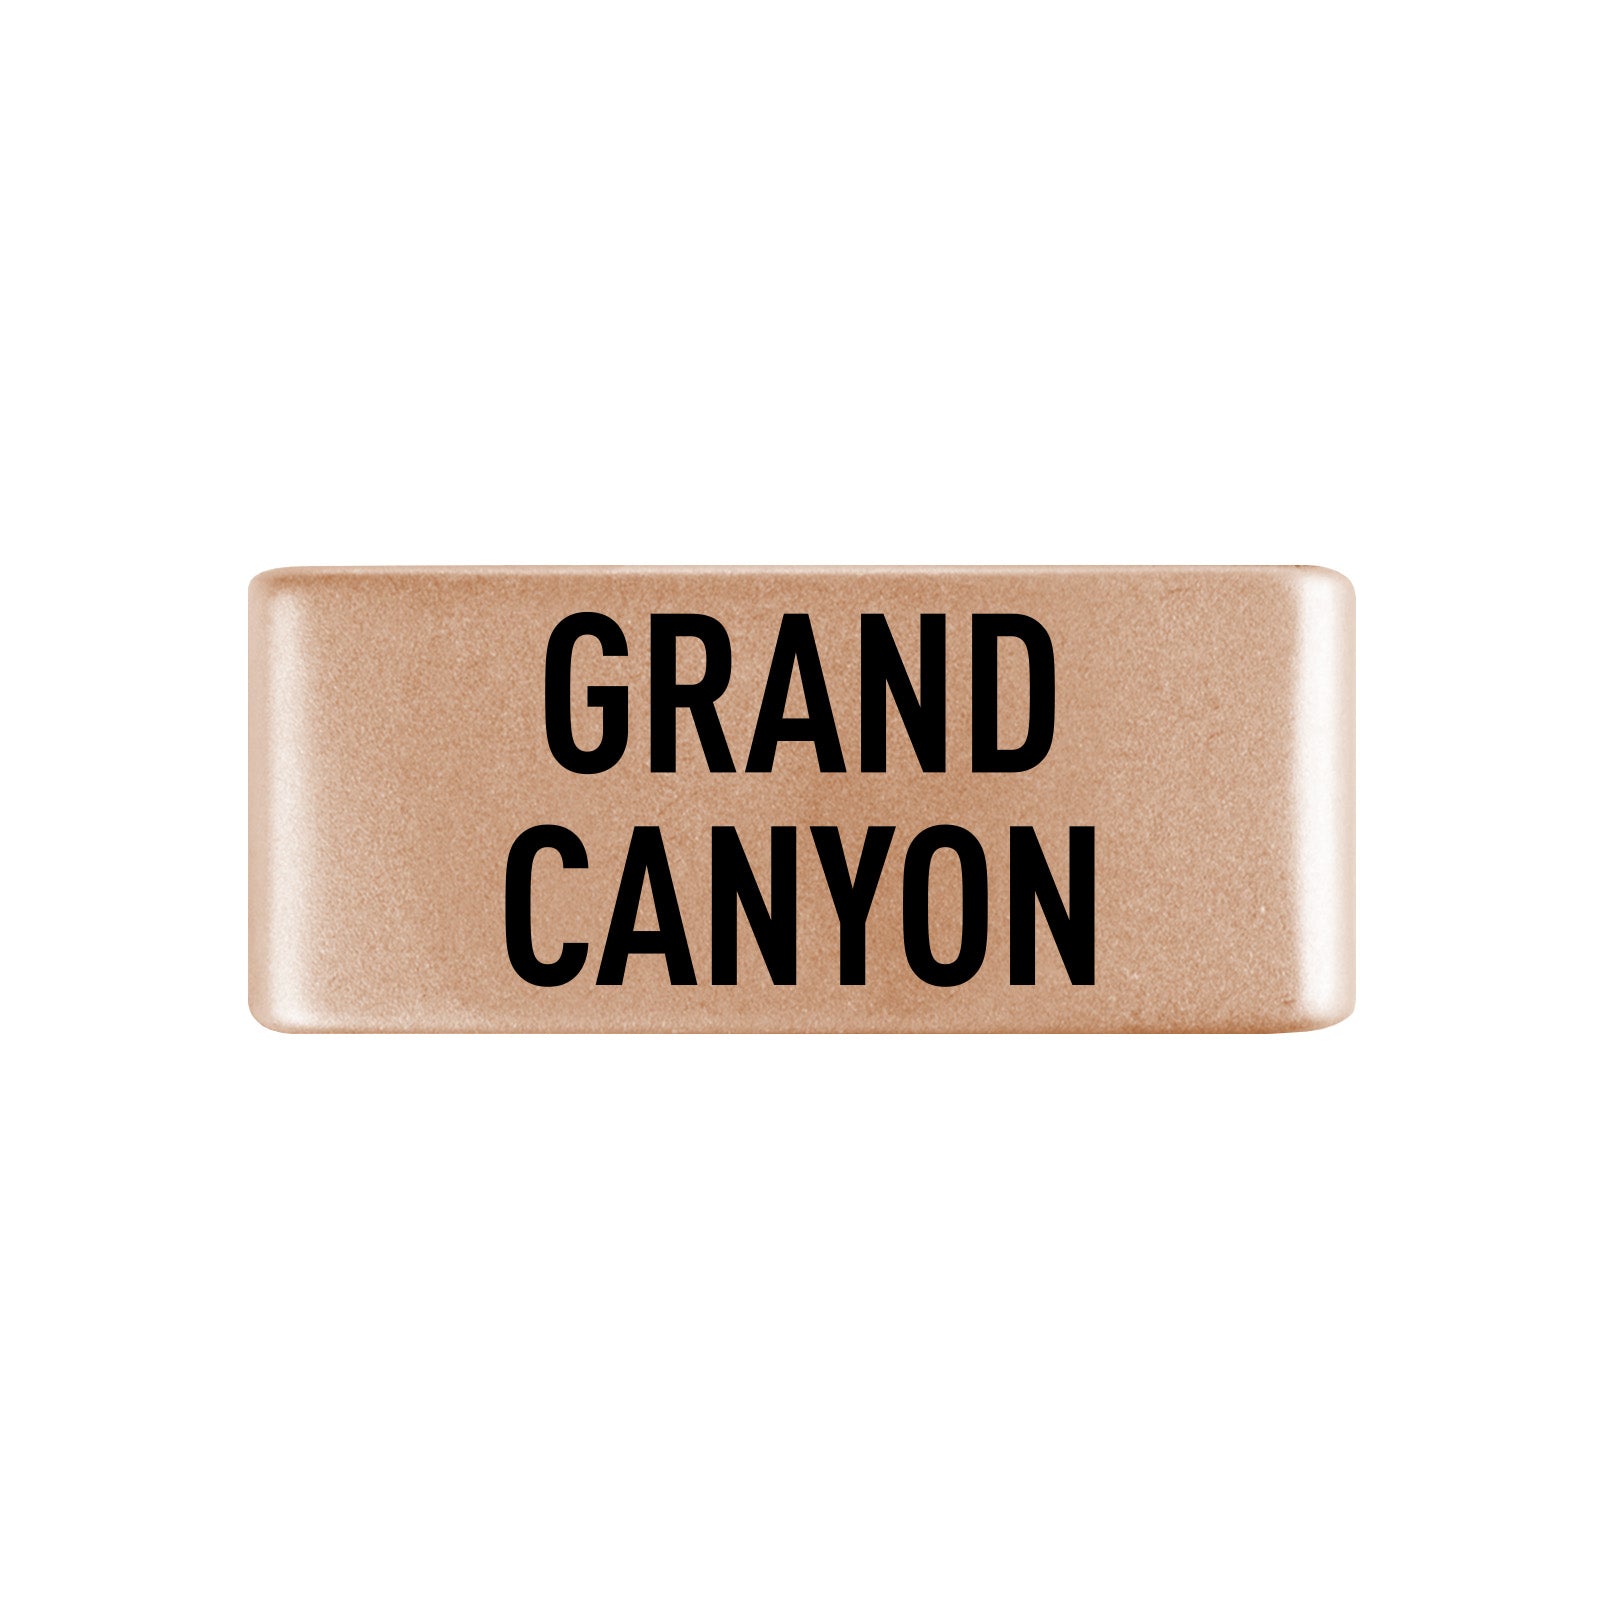 Grand Canyon Badge Badge 13mm - ROAD iD